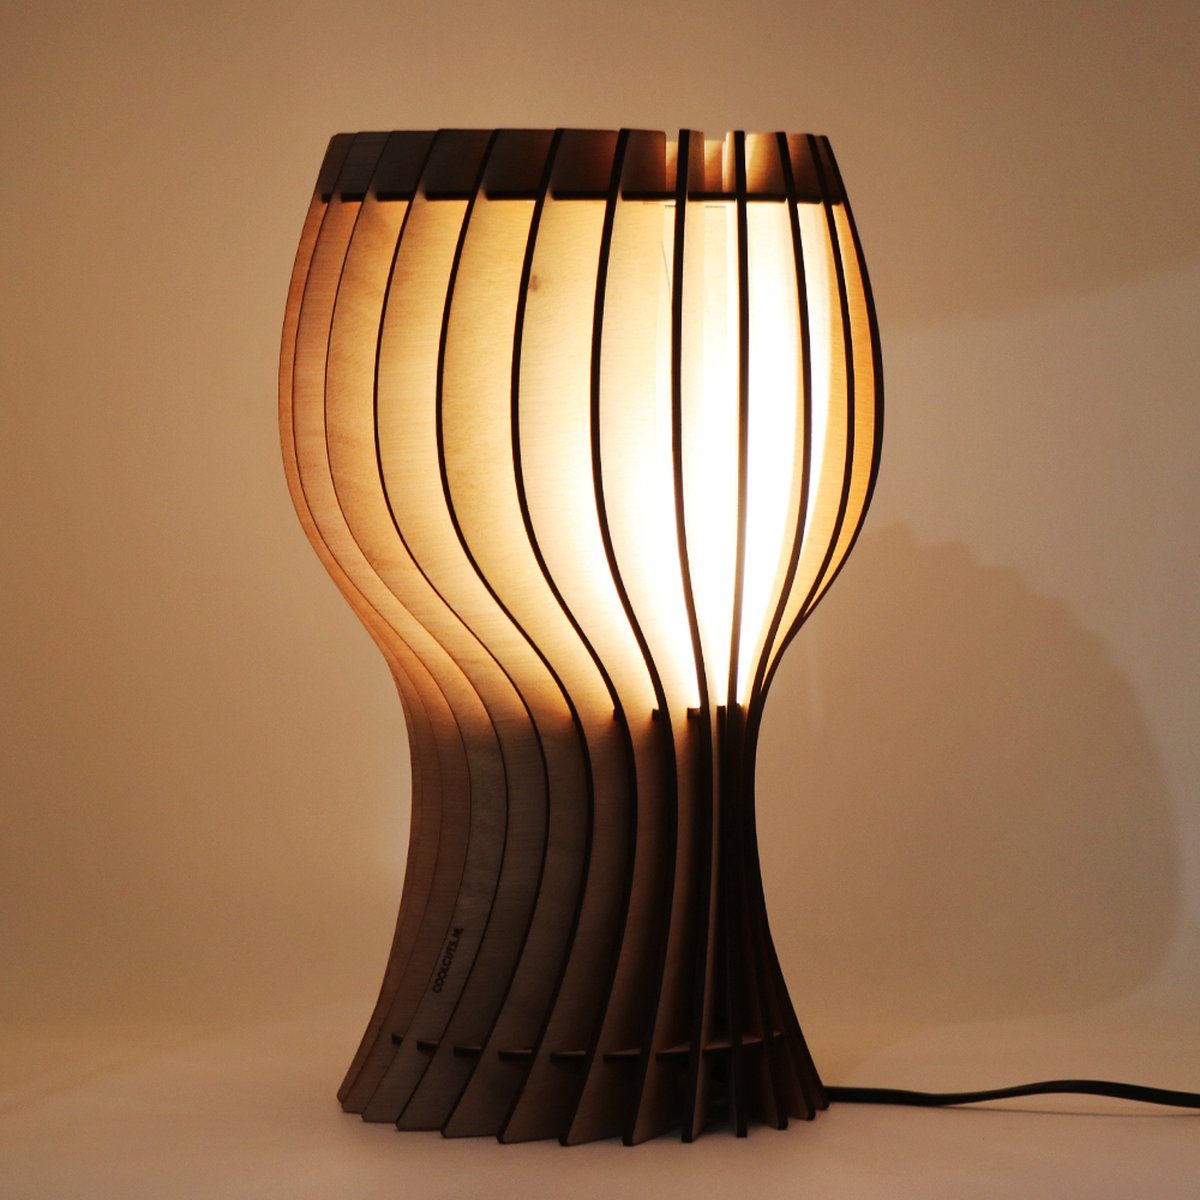 Tafellamp Viinilasi Ø23 cm - Houten tafellamp - Dutch Design - Verlichting voor woonkamer, eetkamer, of slaapkamer - Kant en klaar gemonteerde kamerlamp - CoolCuts